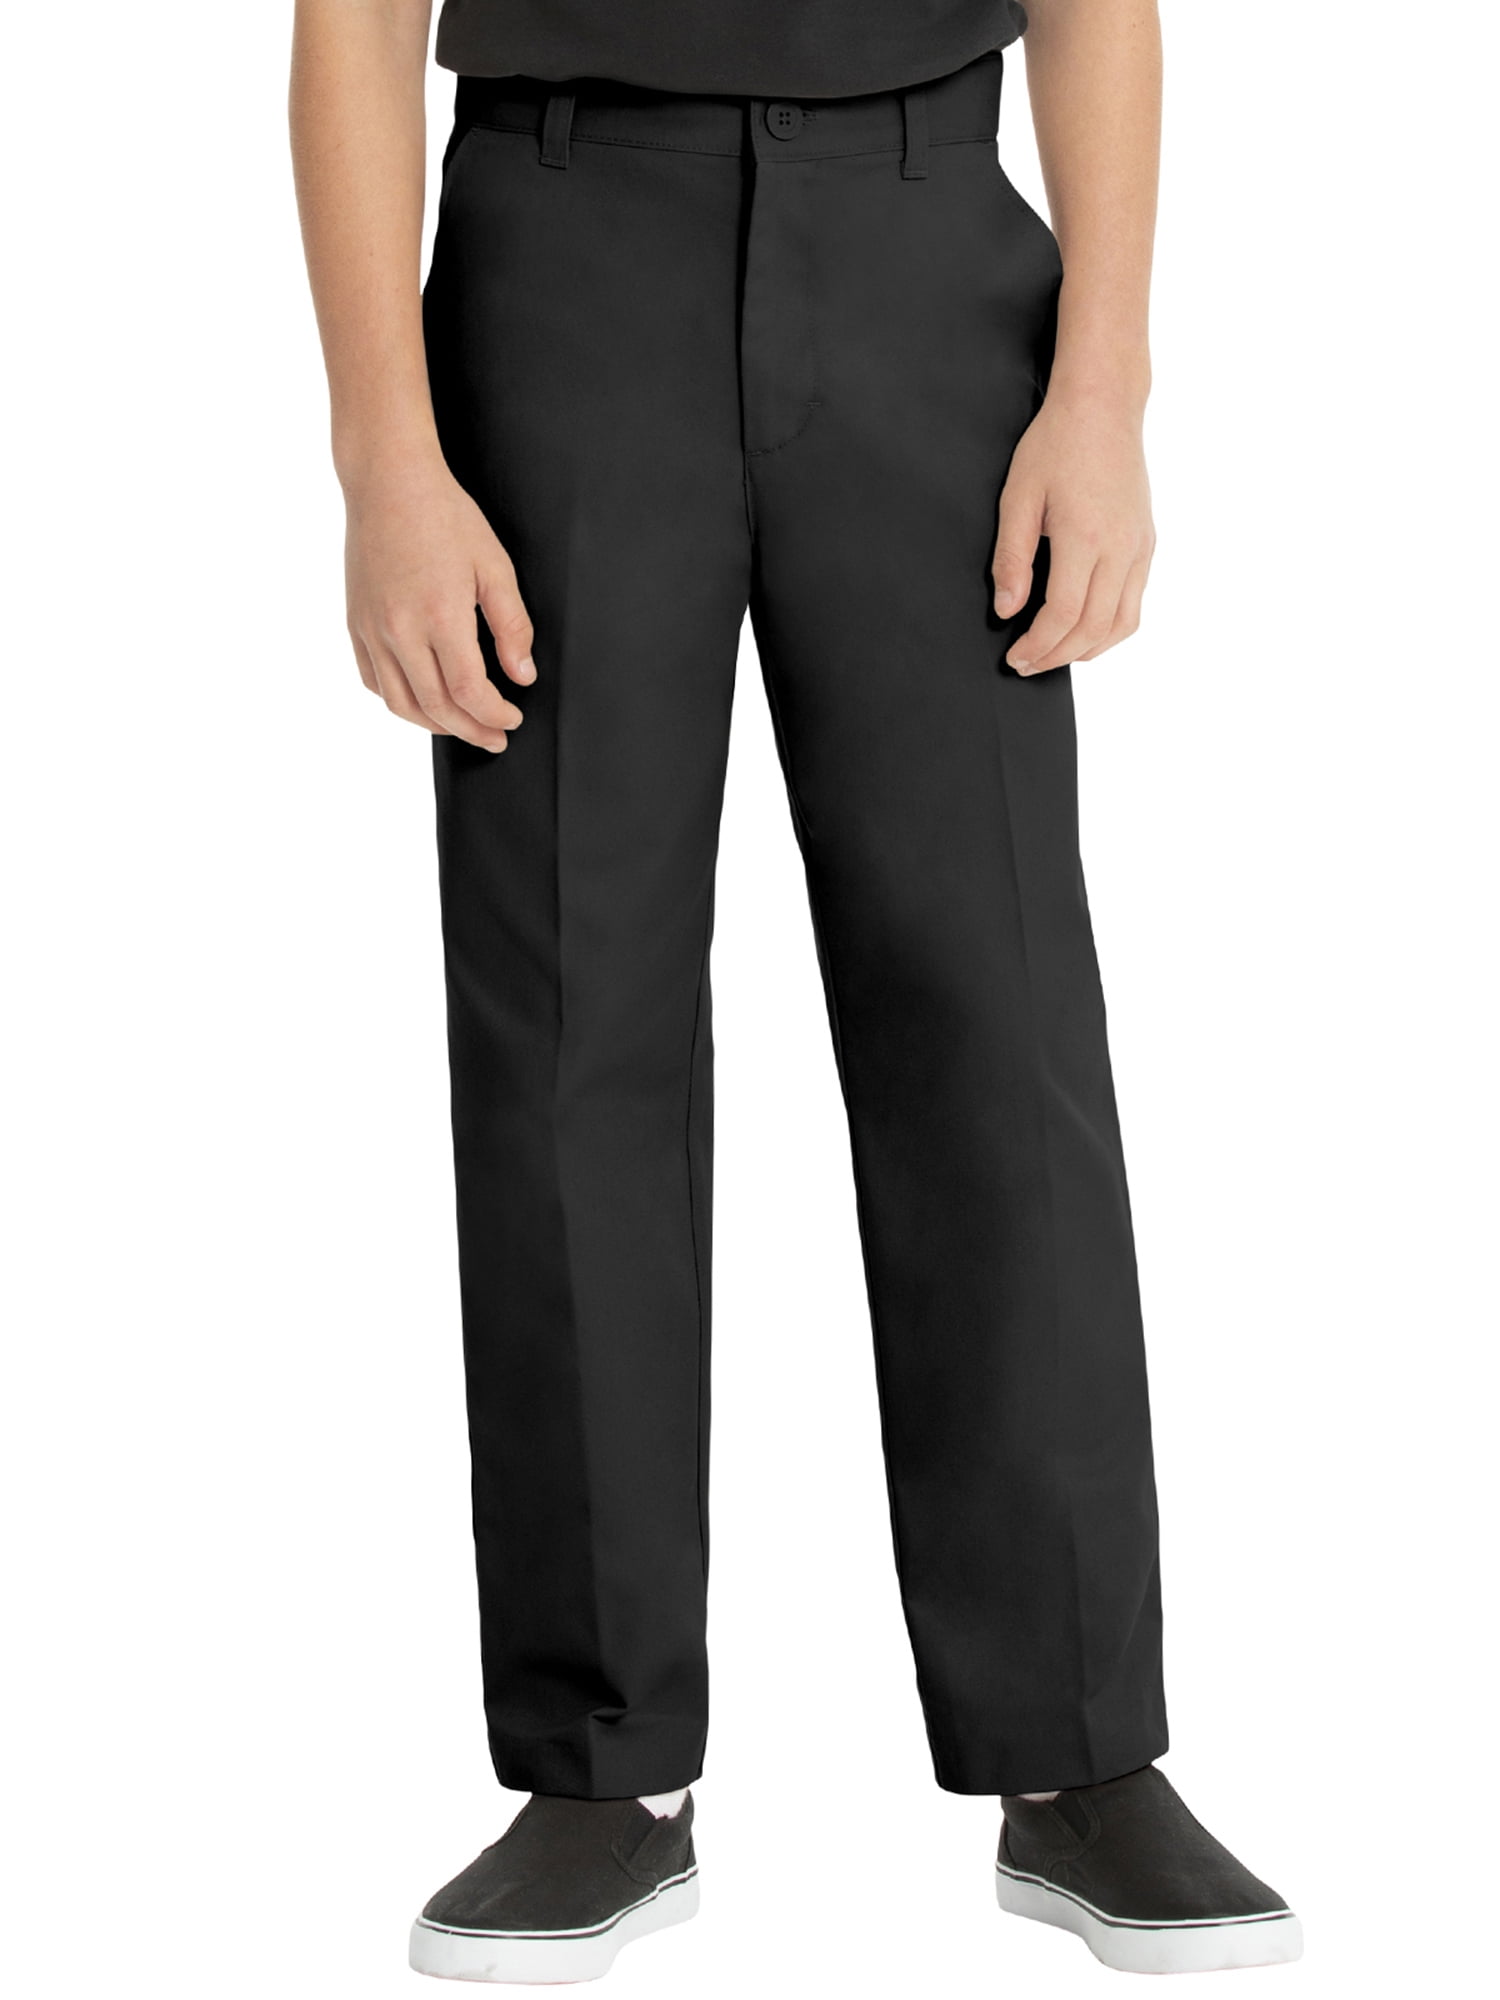 Real School Boys School Uniform Flat Front Pant, Sizes 4-16 - Walmart.com